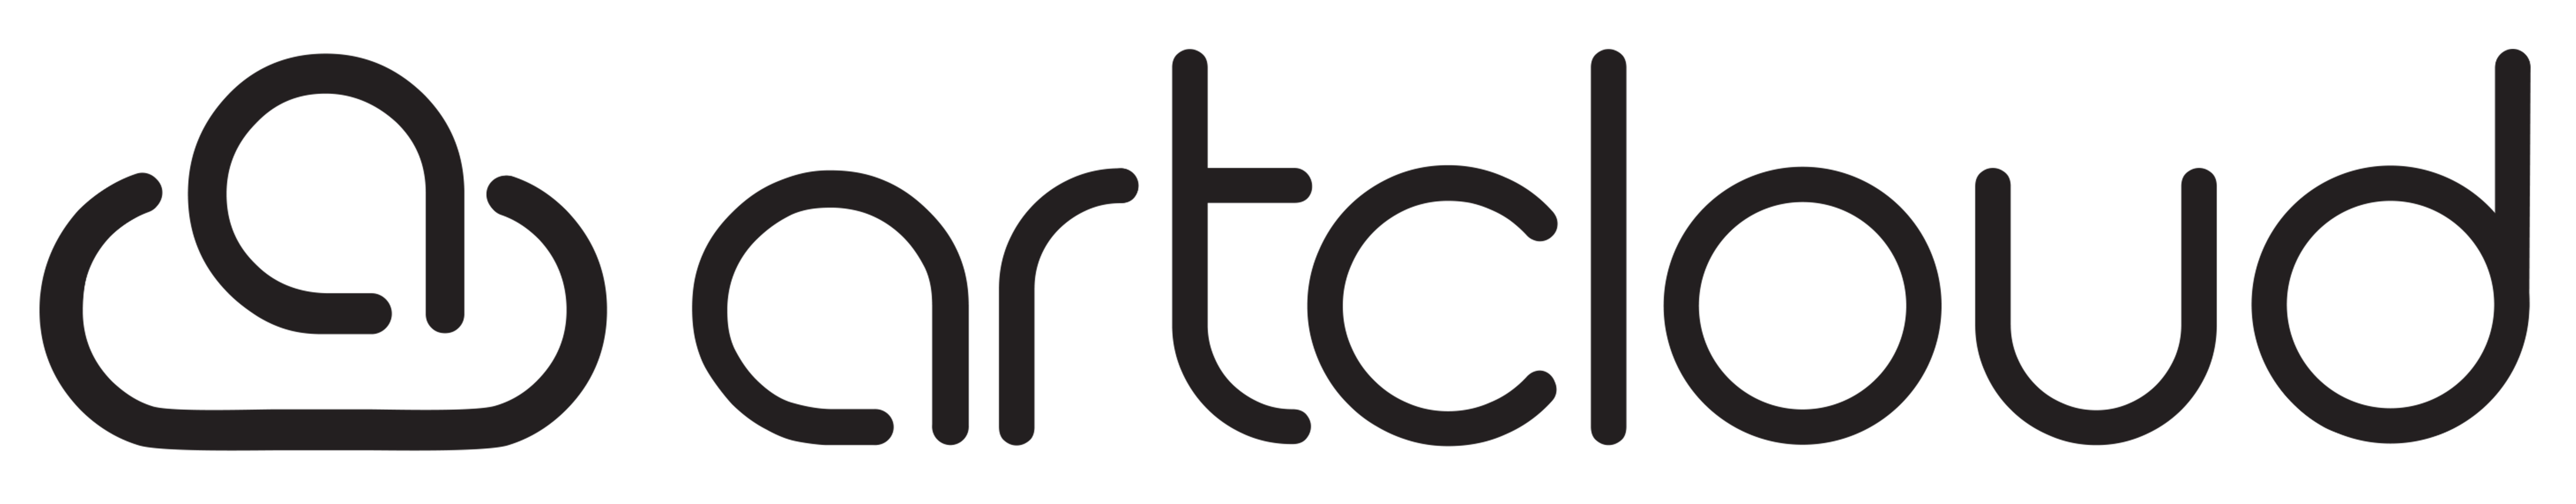 ArtCloud Logo Full